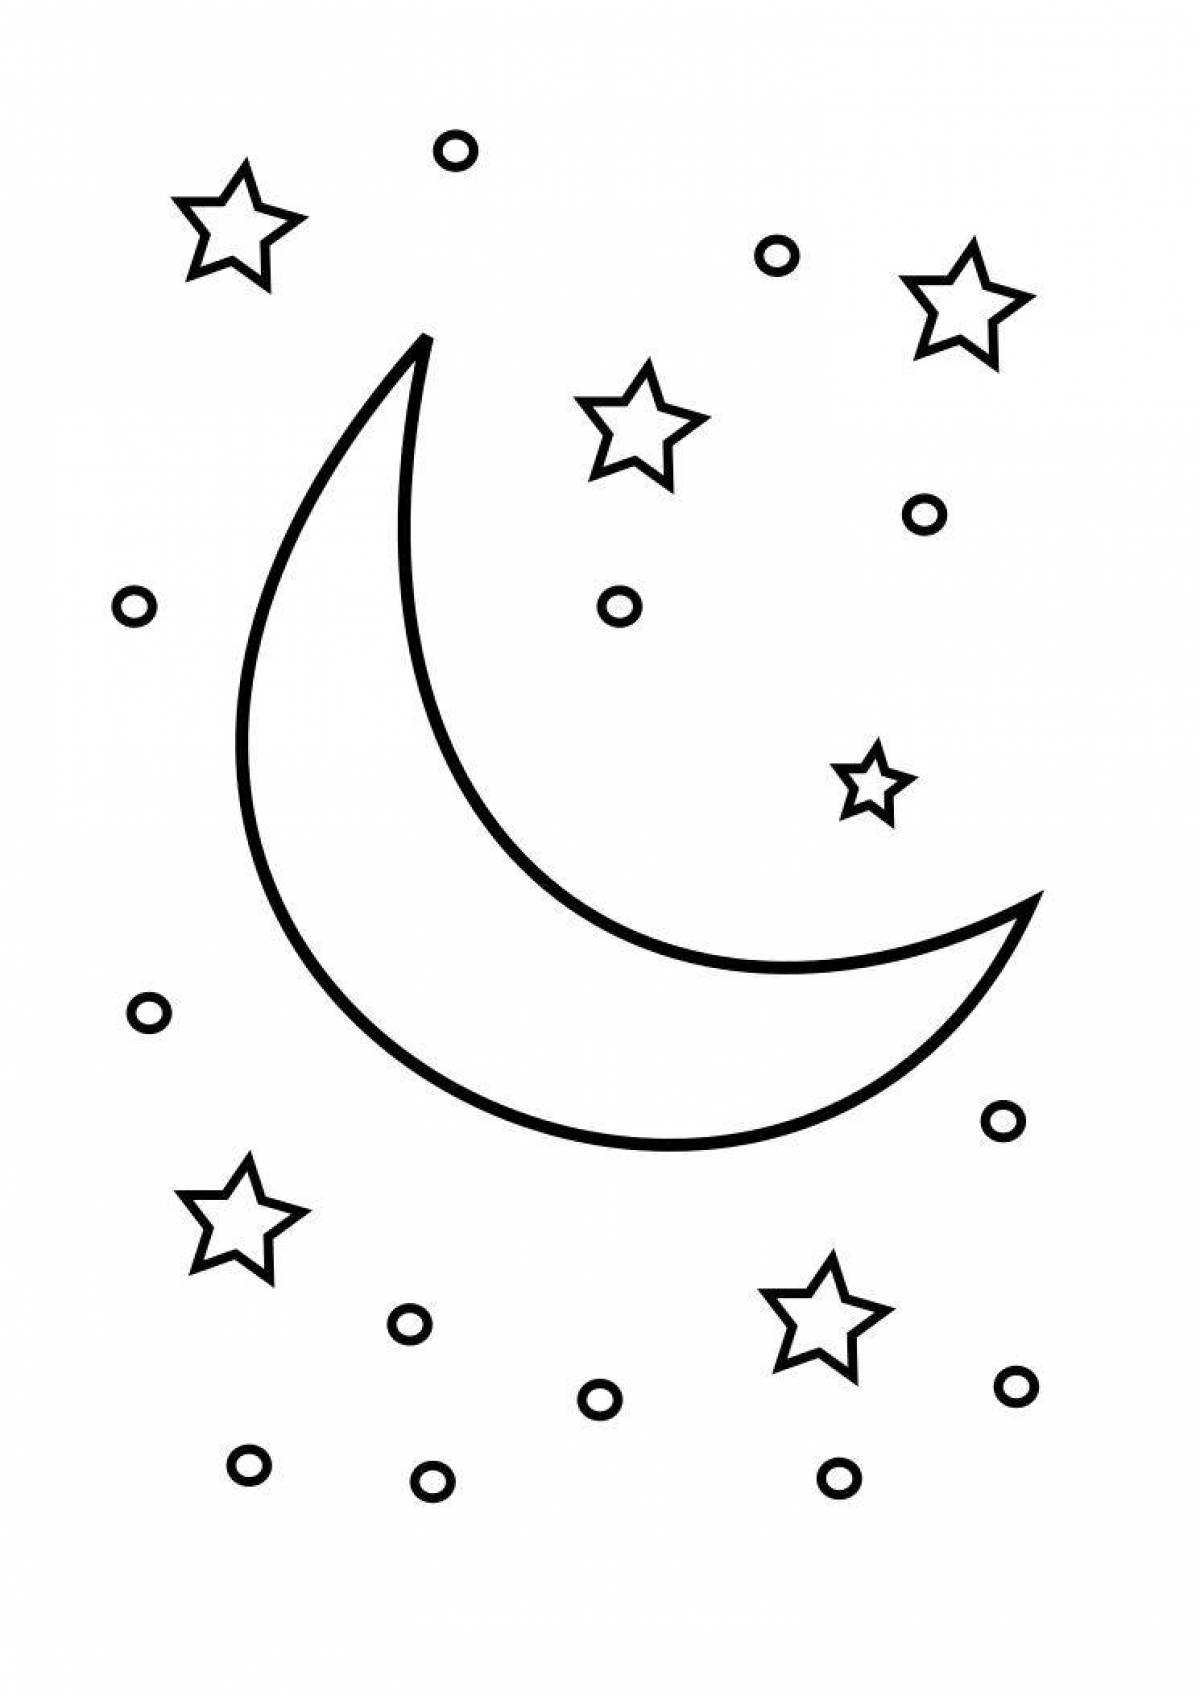 Moon and stars